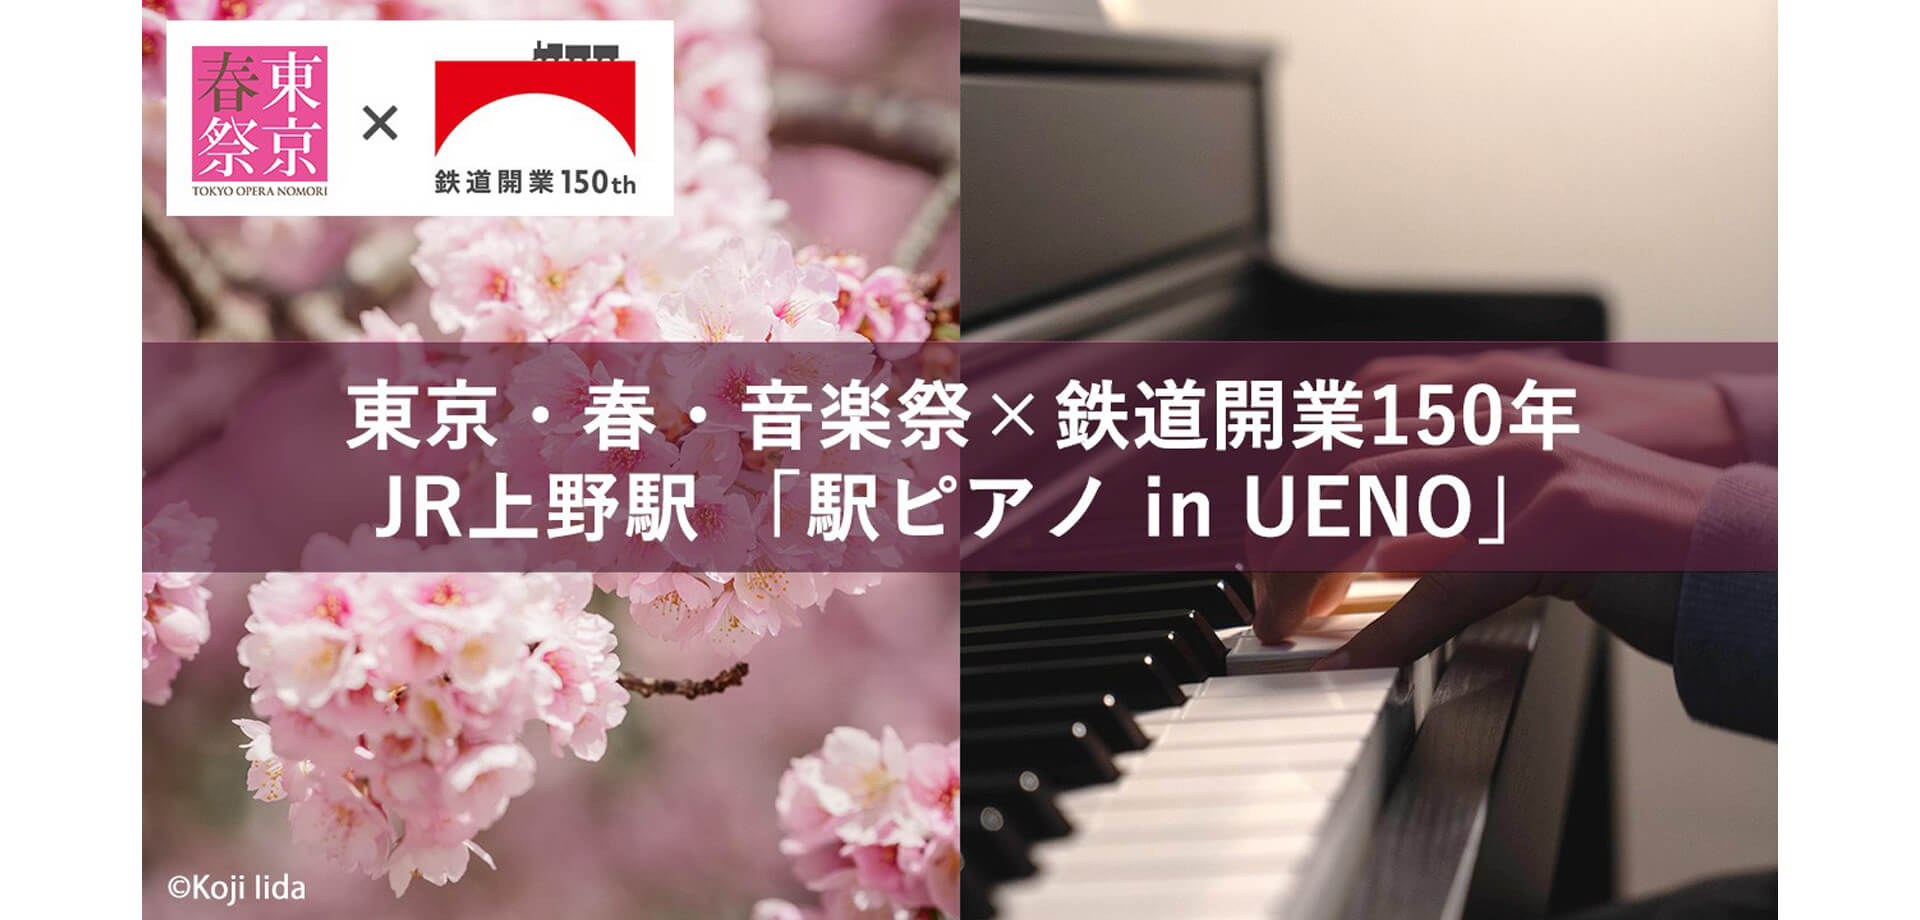 東京・春・音楽祭×鉄道開業150年 JR上野駅 「駅ピアノin UENO」